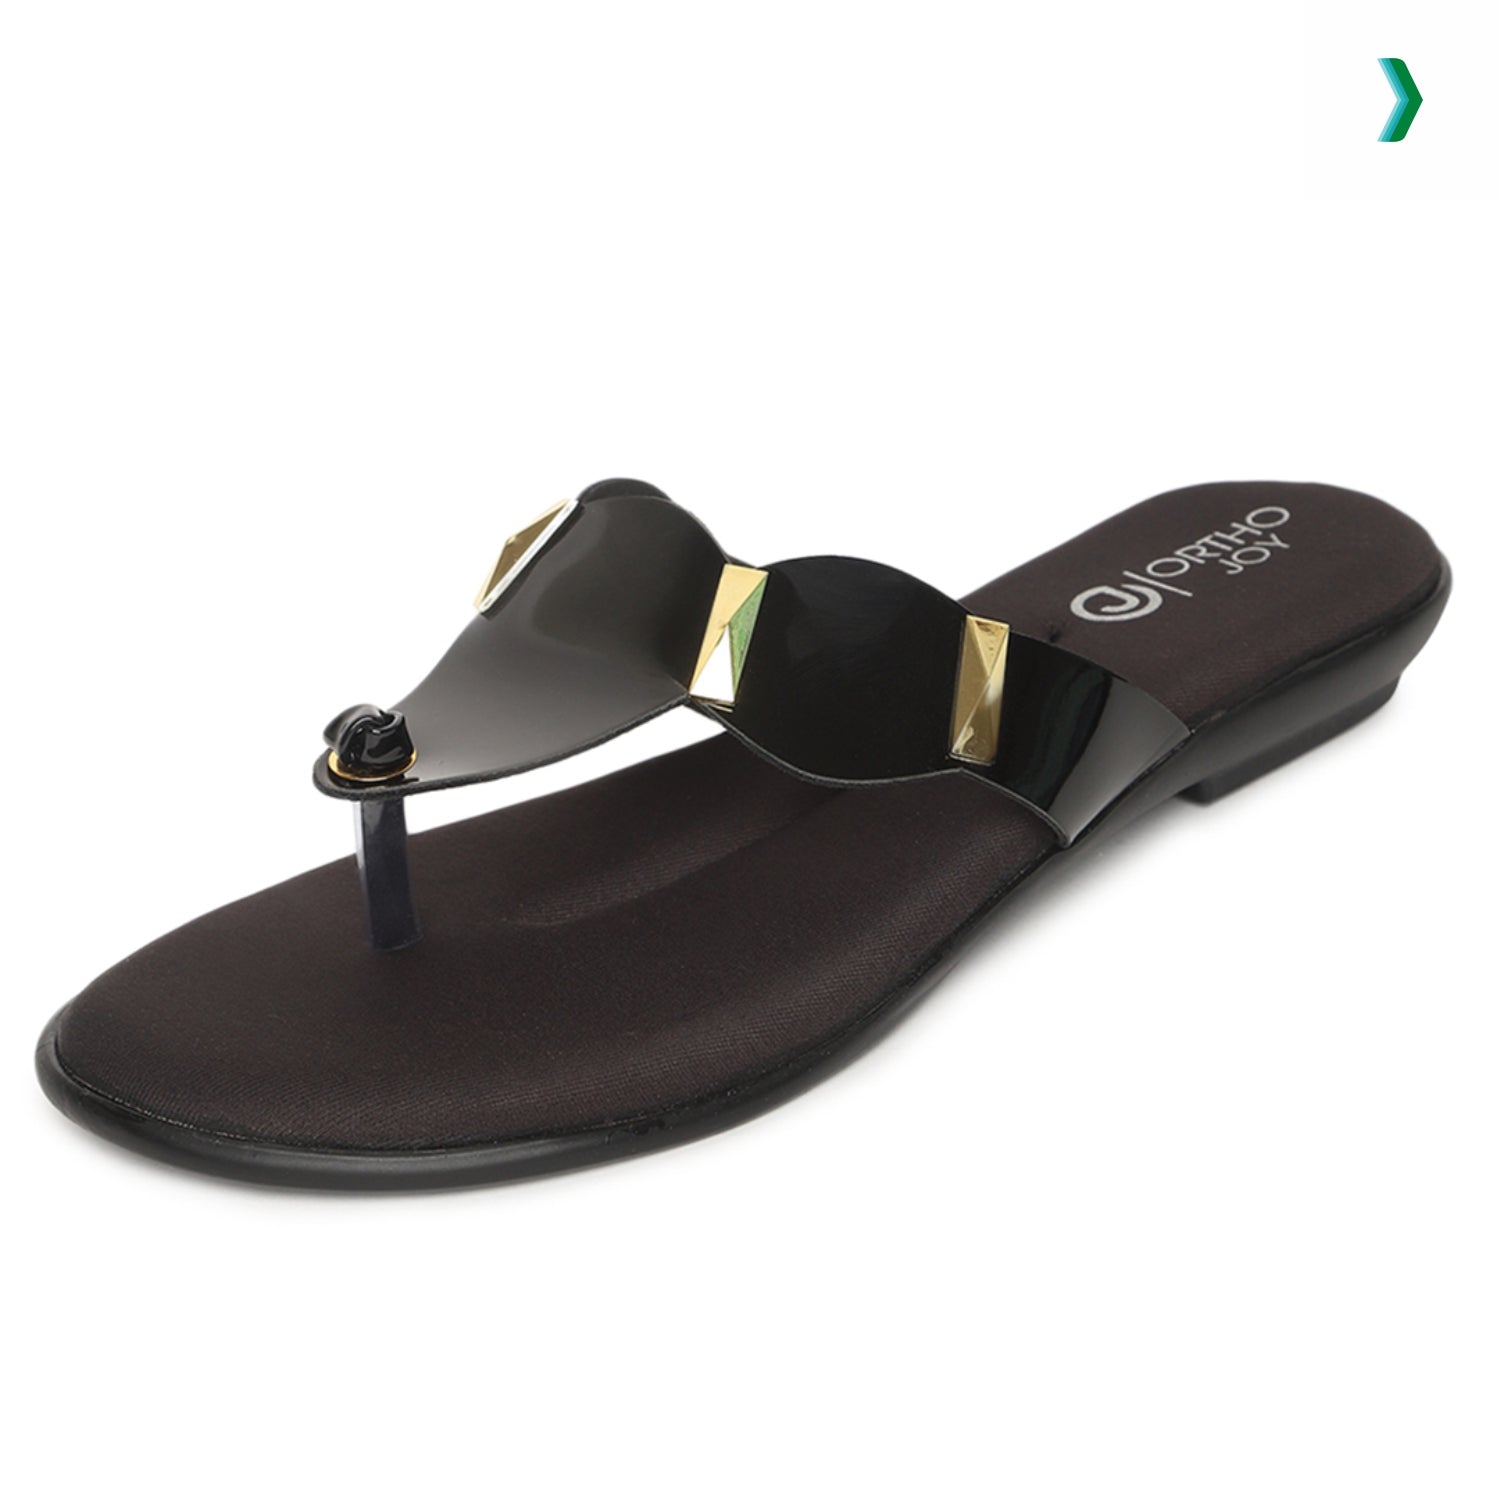 flat sandals for women , comfortable sandals